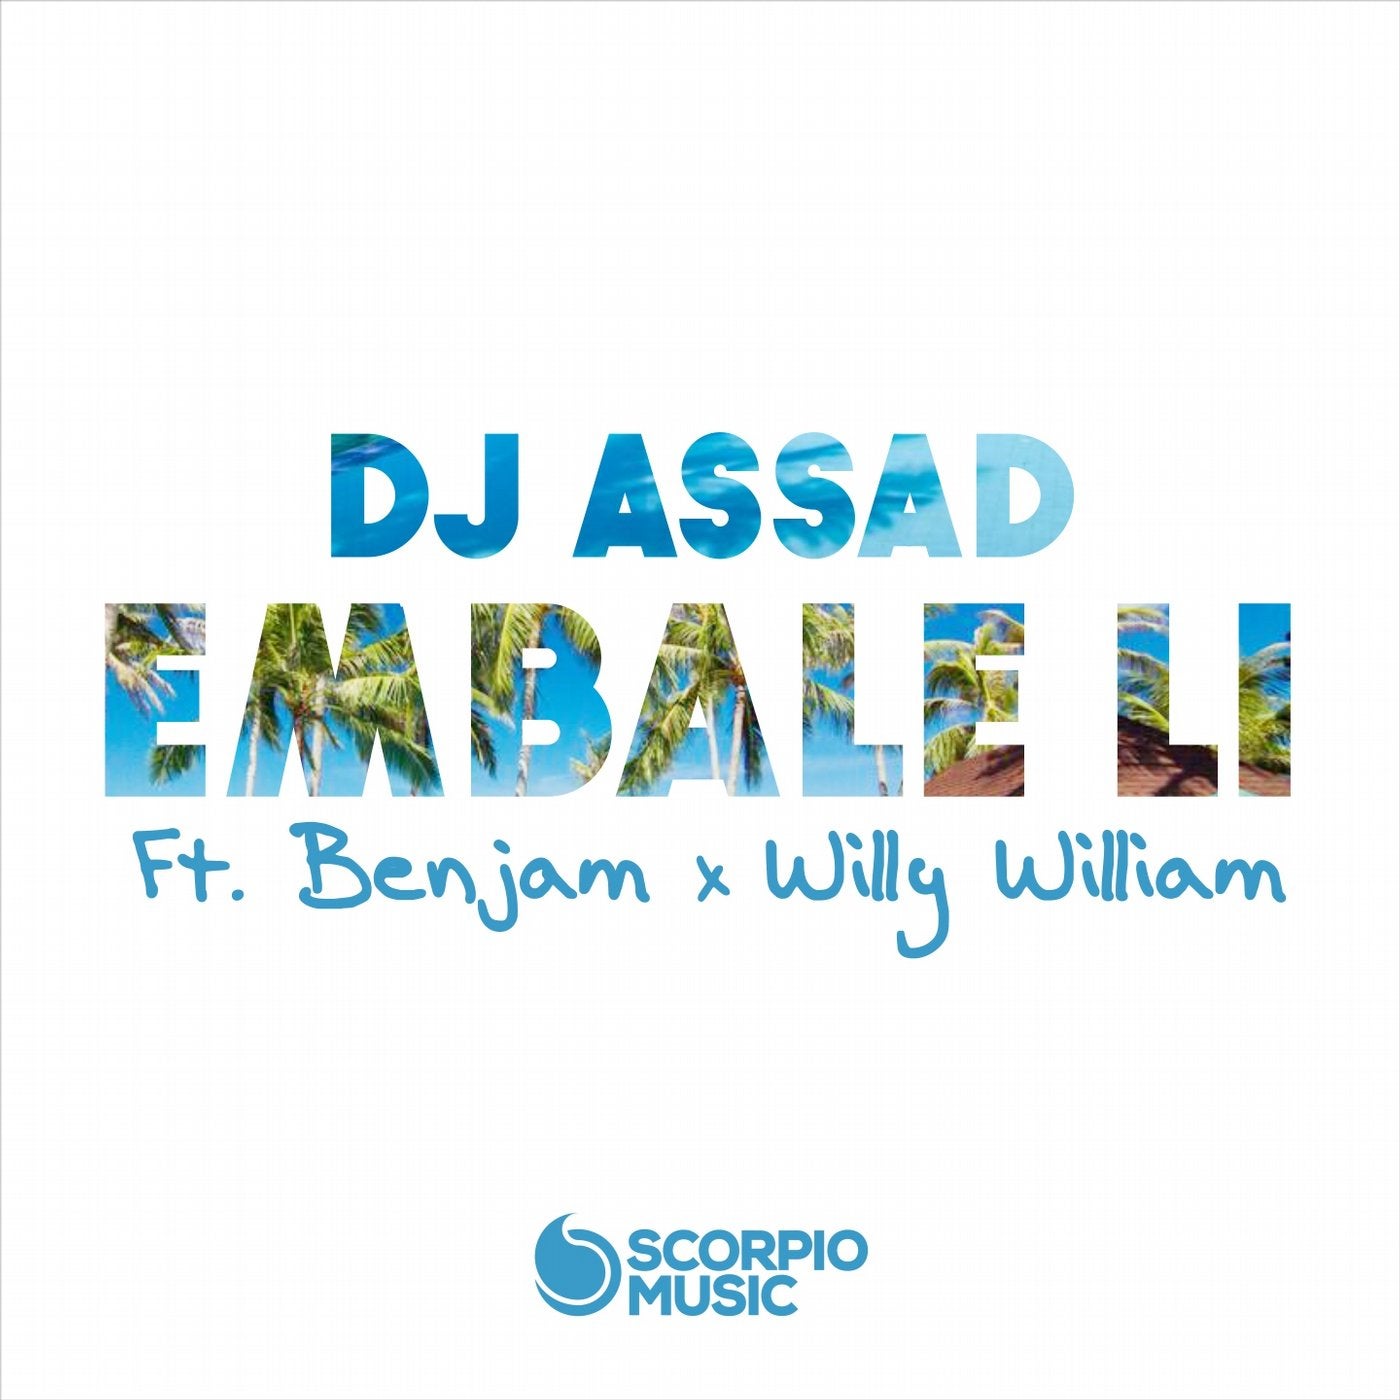 Embale li (feat. Benjam, Willy William)